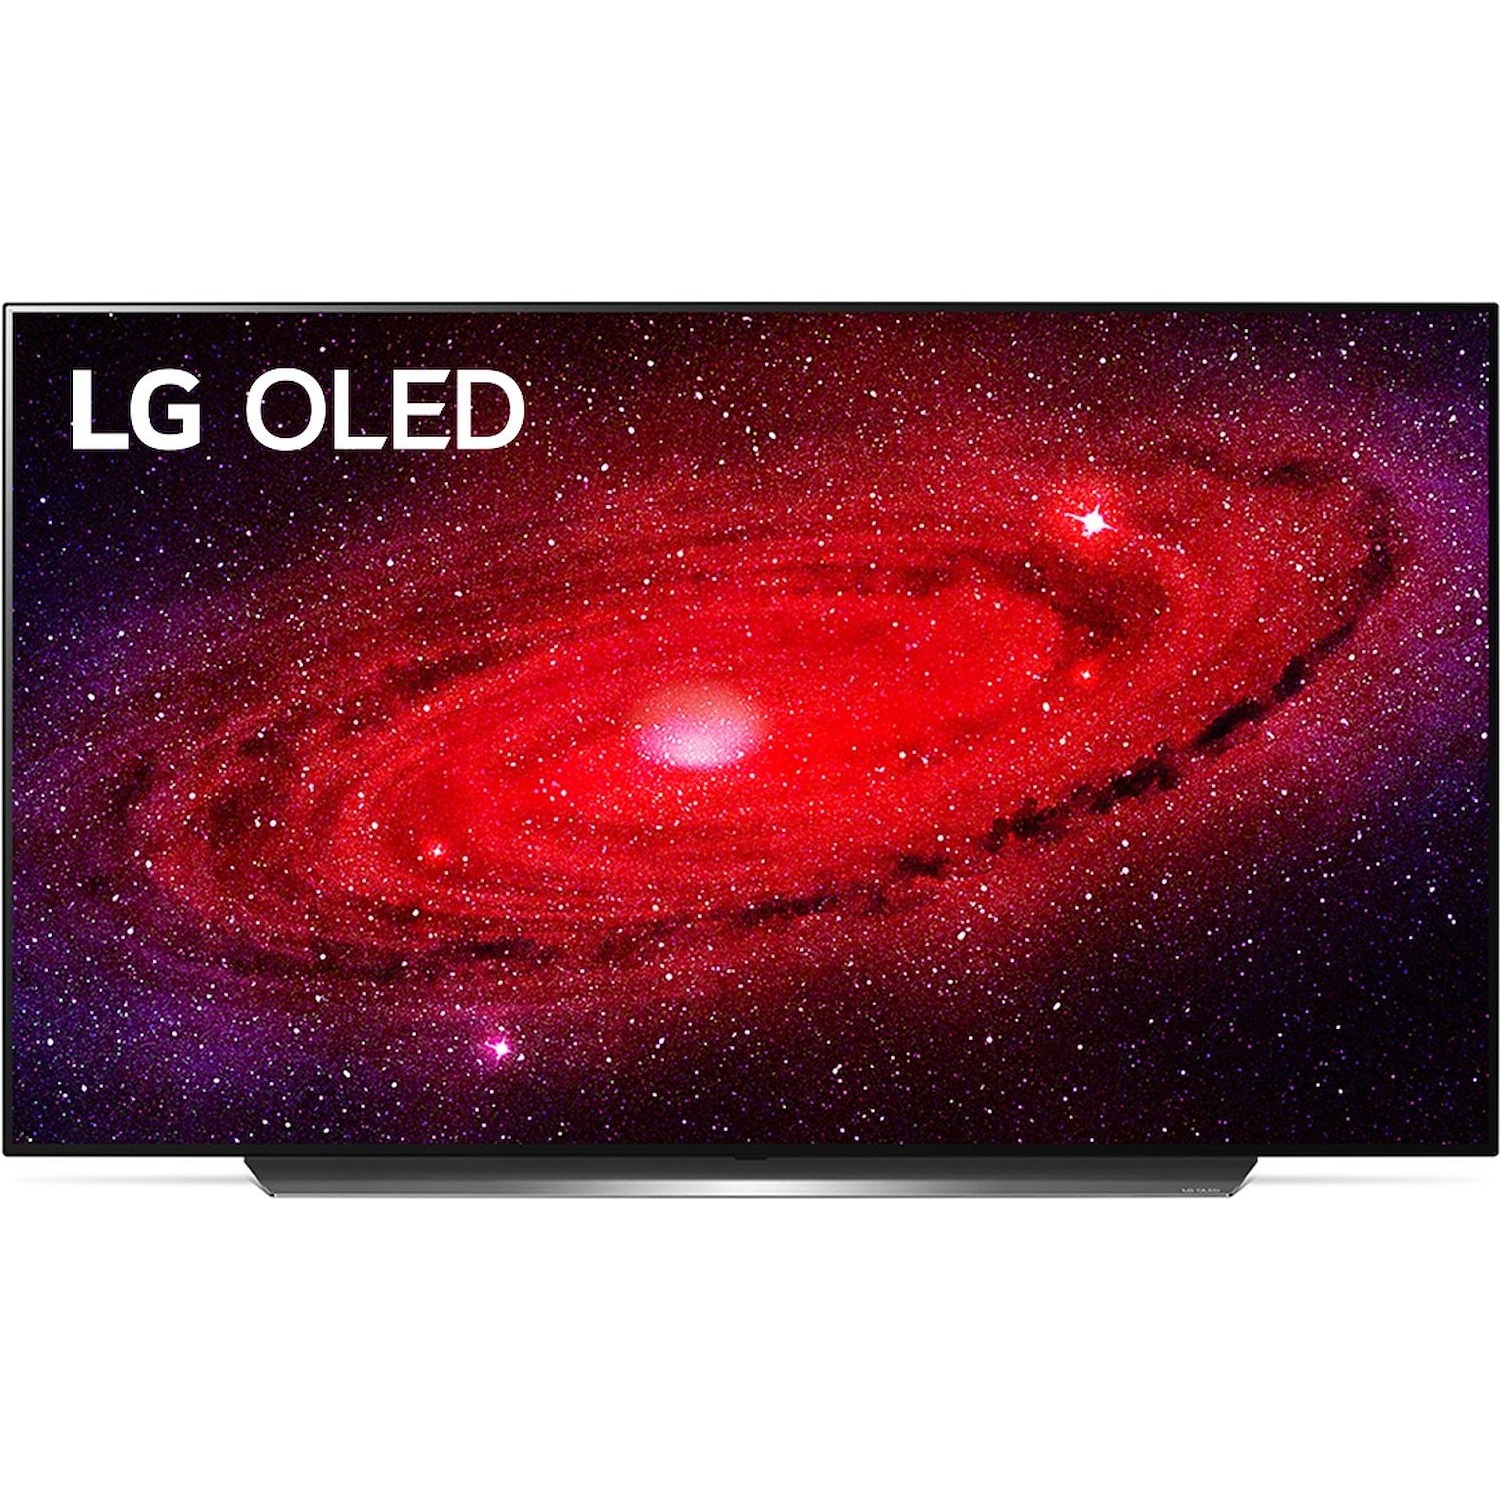 Immagine per TV OLED UHD 4K Smart LG OLED55CX6 da DIMOStore